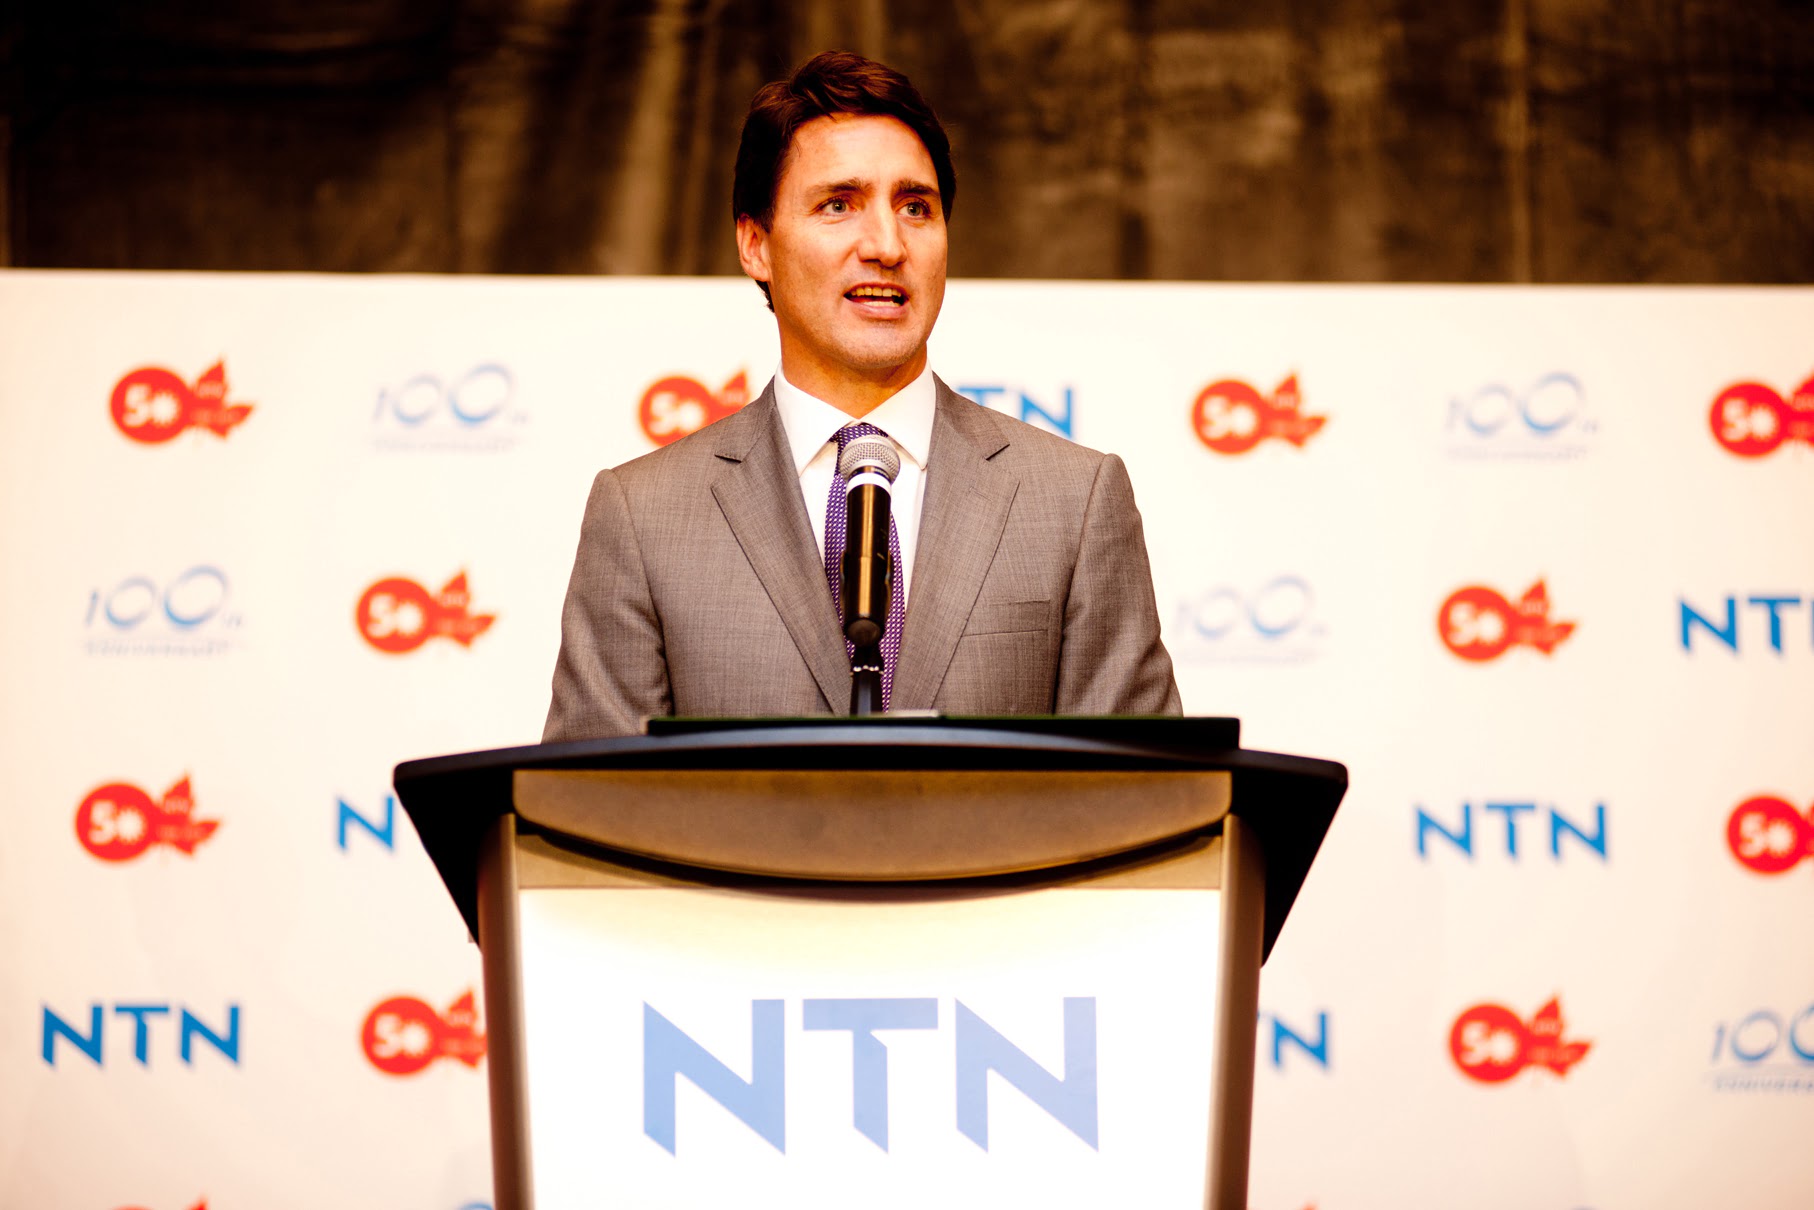 Prime Minister Justin Trudeau at NTN anniversary event